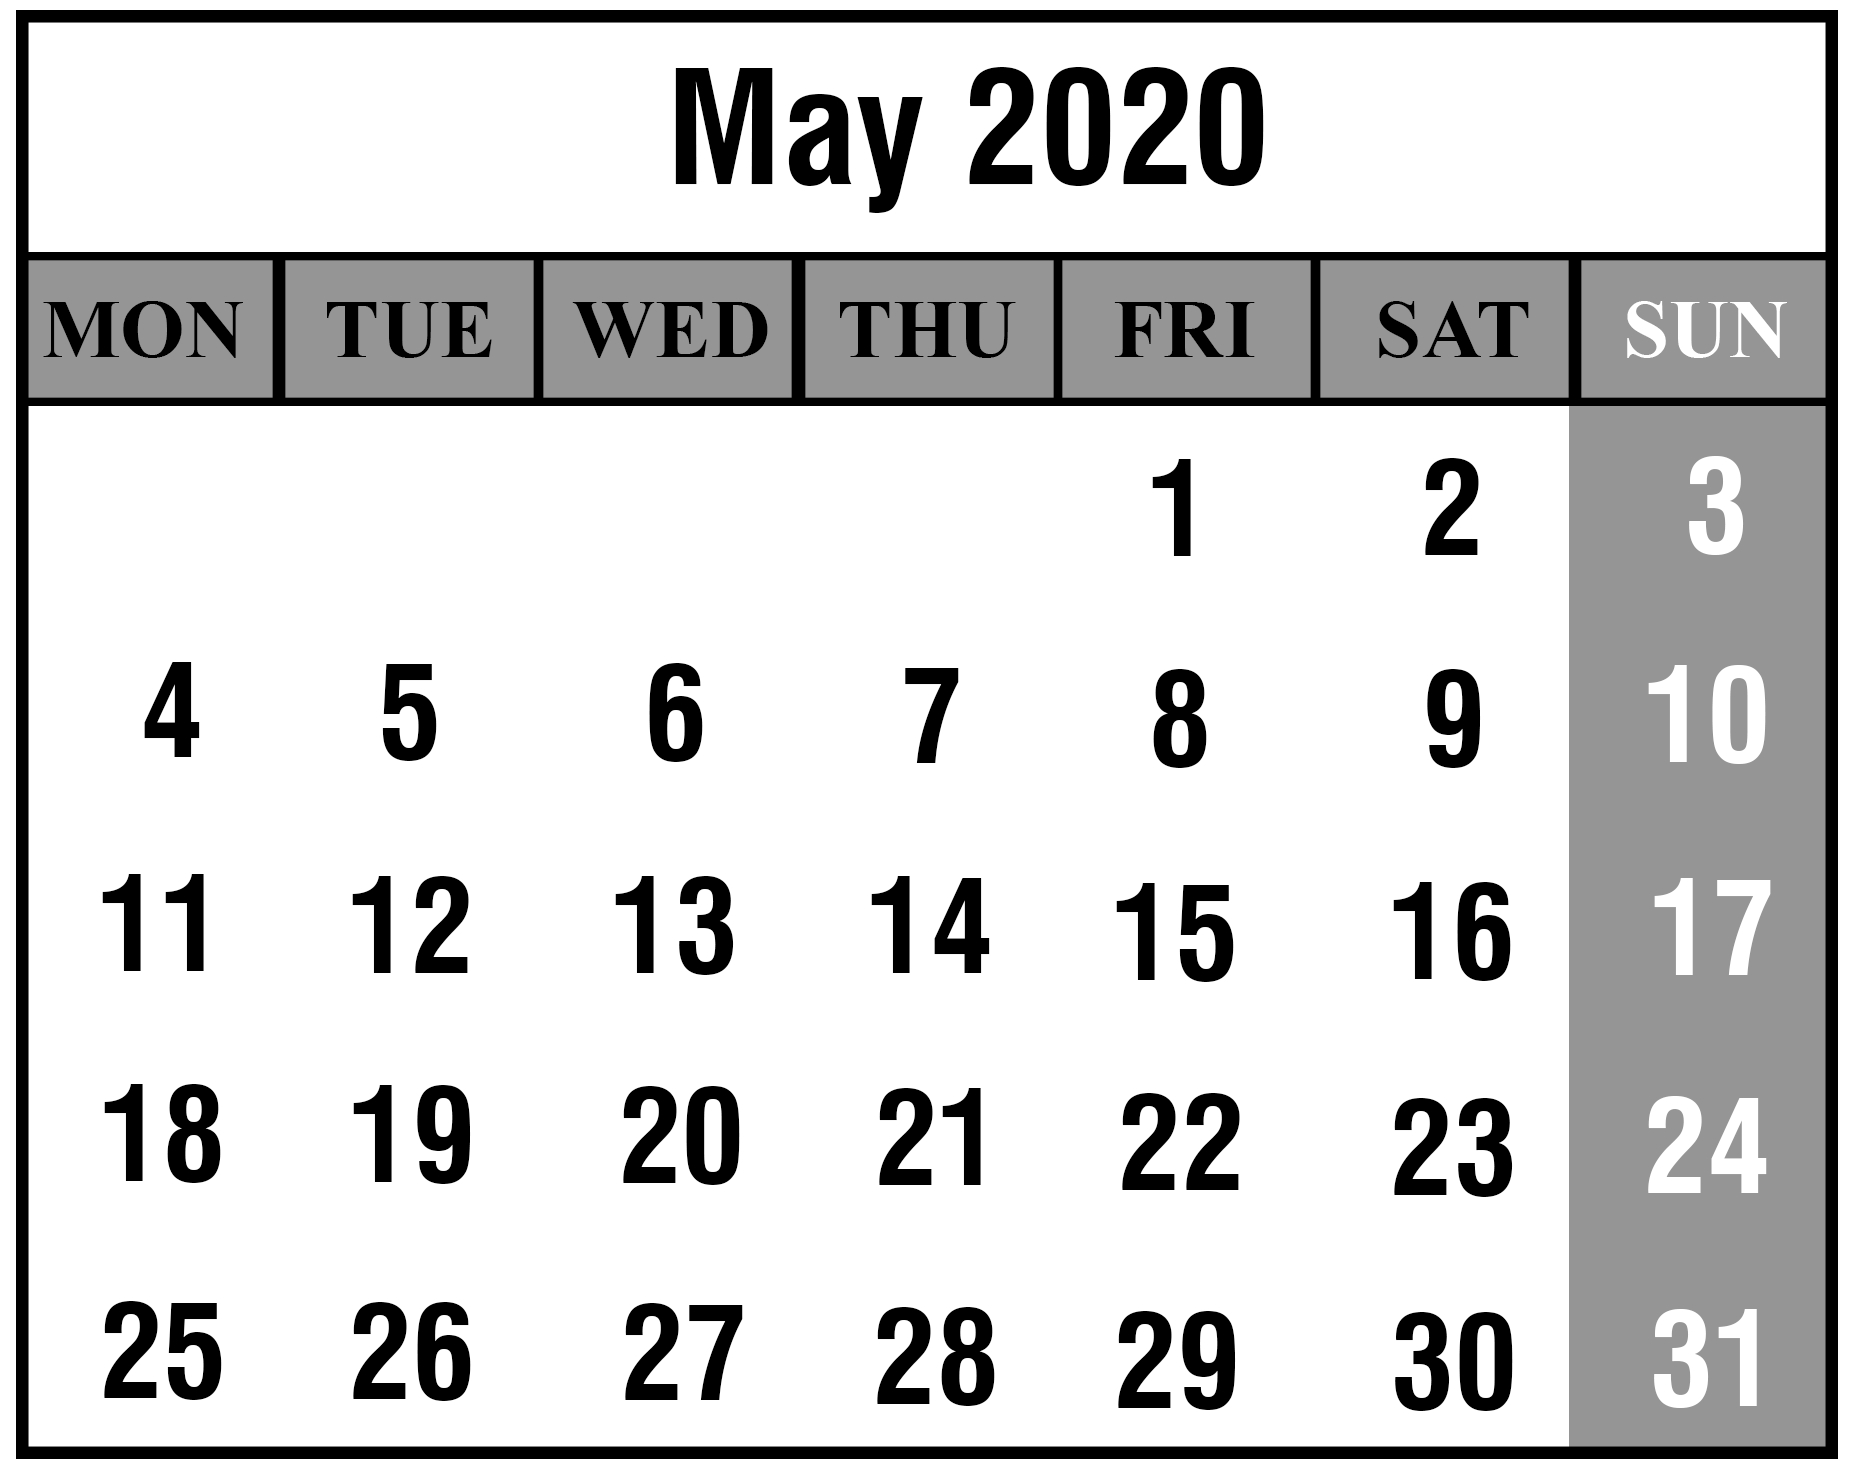 May 2020 Calendar Printable With Holidays Templates Perky May 1 2020 Calendar